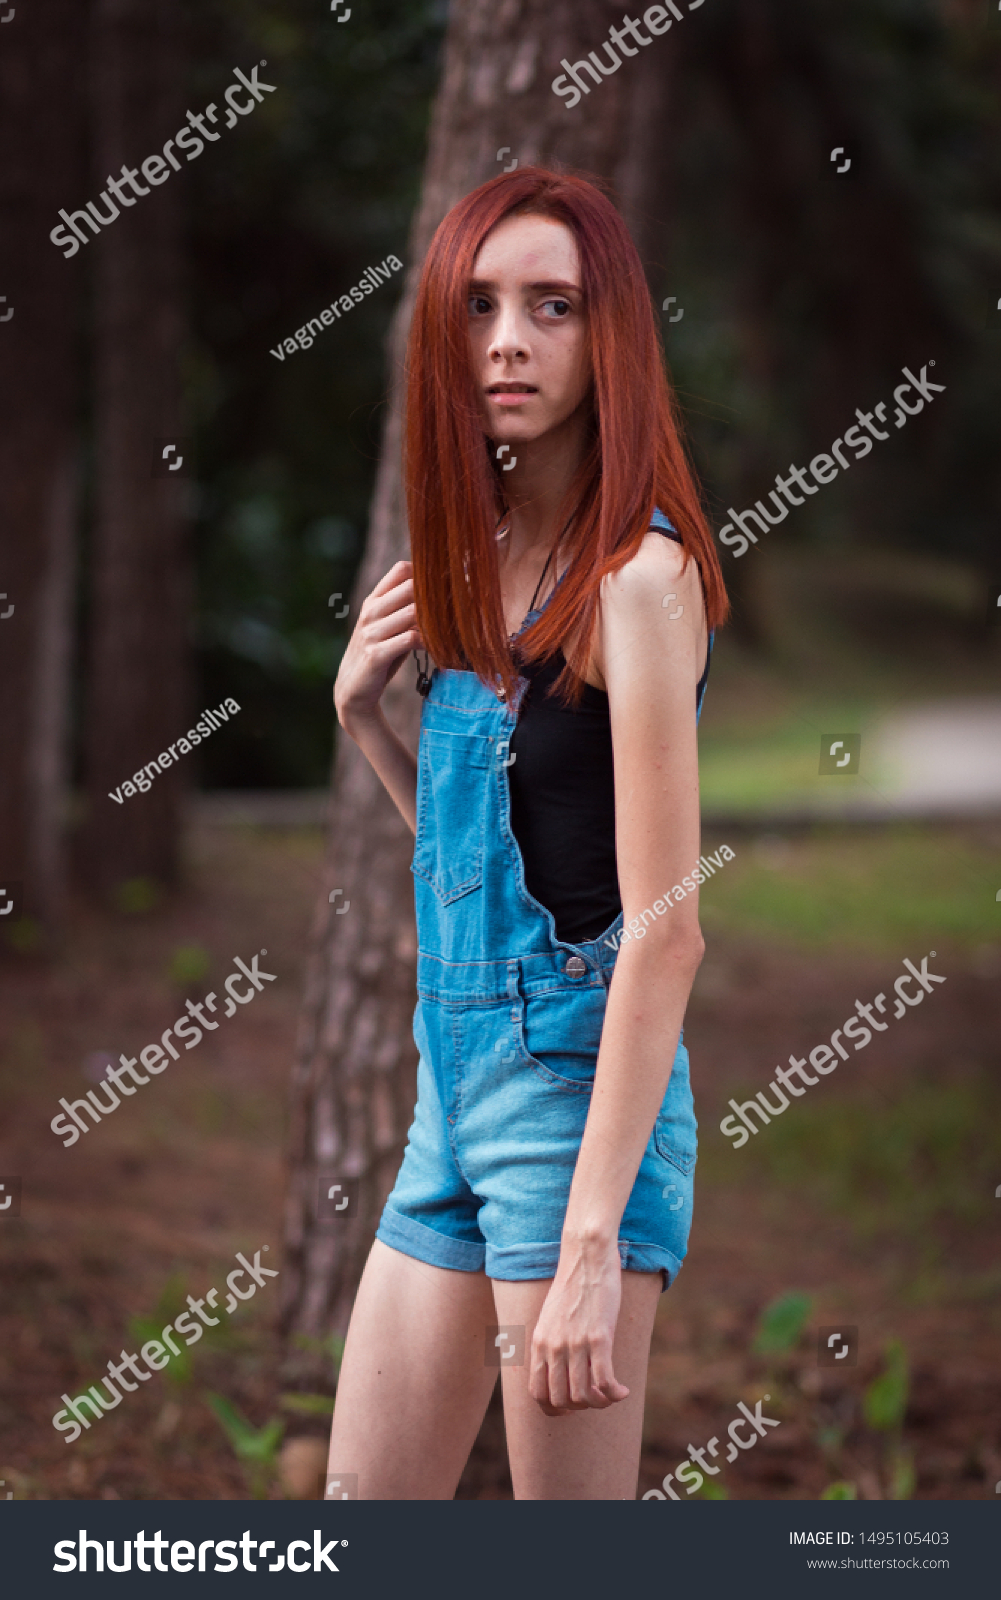 Skinny Redhead Girls